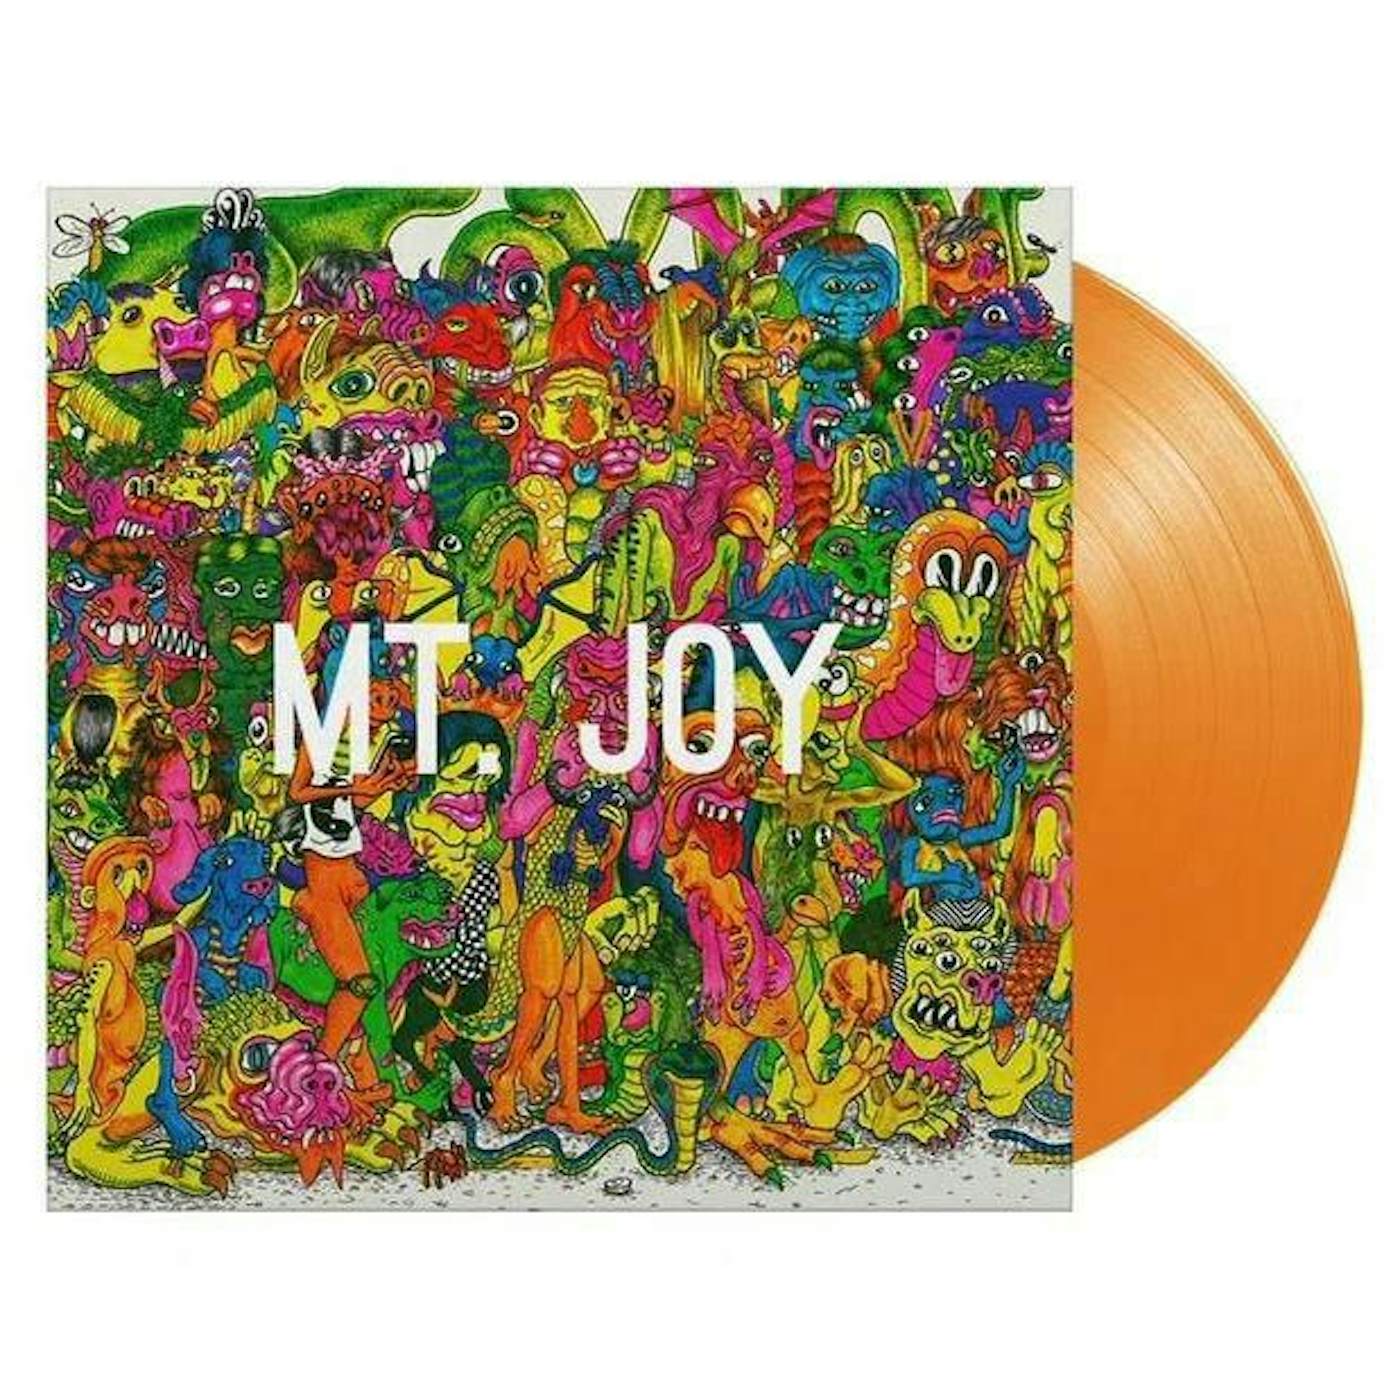 Mt. Joy Orange Blood (Translucent Orange vinyl) record